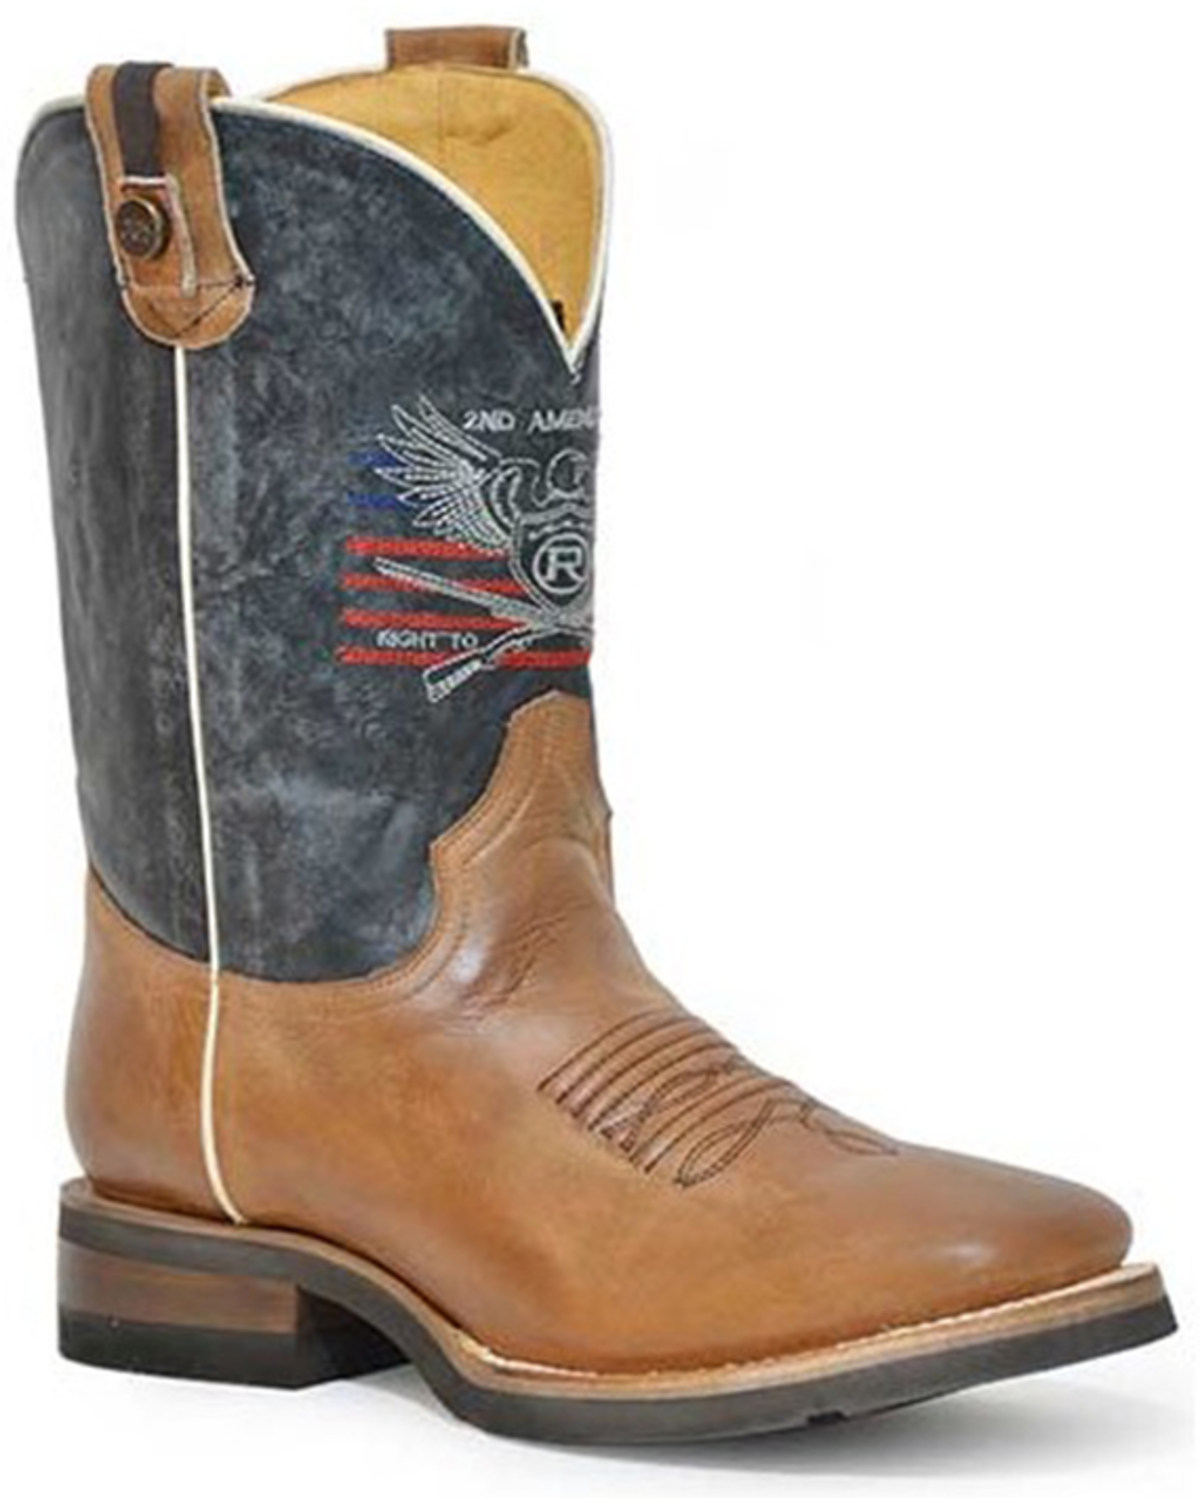 Roper Men's 2nd Amendment Western Performance Boots - Broad Square Toe